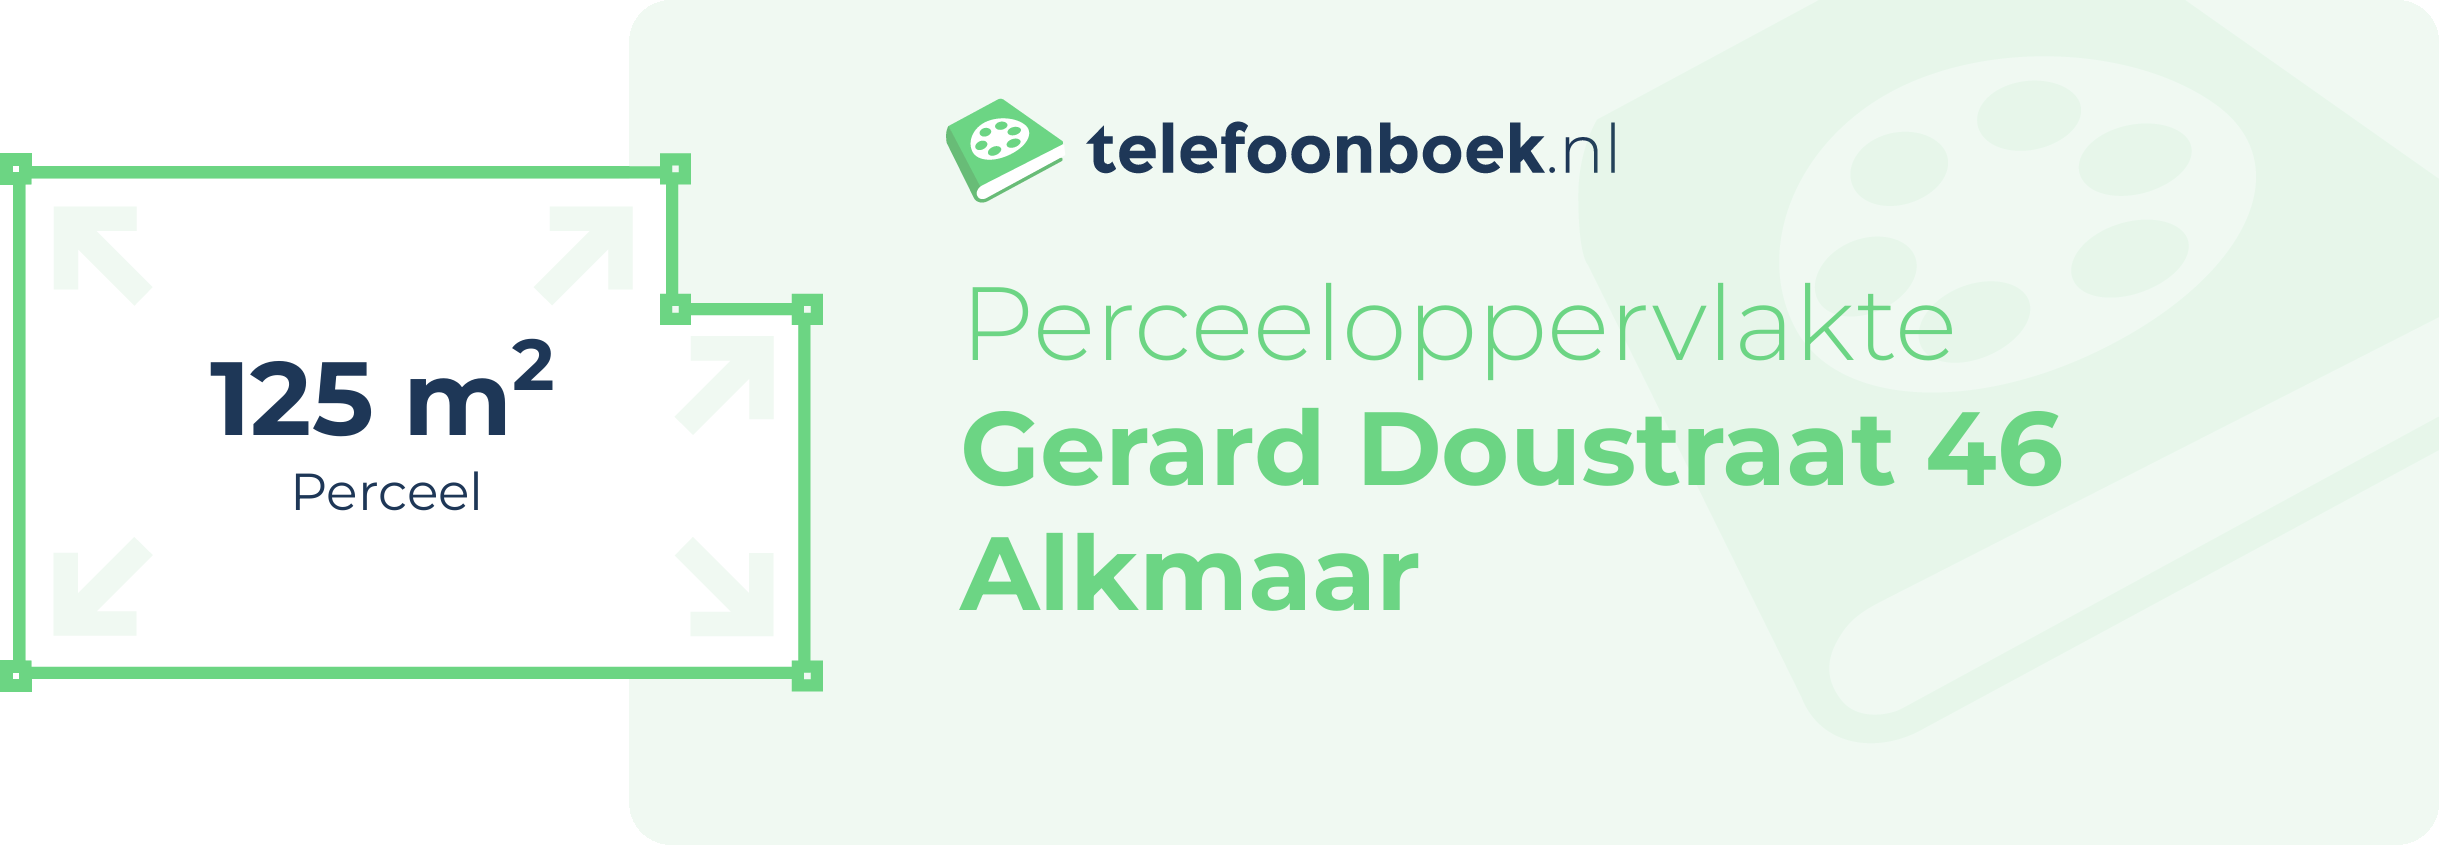 Perceeloppervlakte Gerard Doustraat 46 Alkmaar